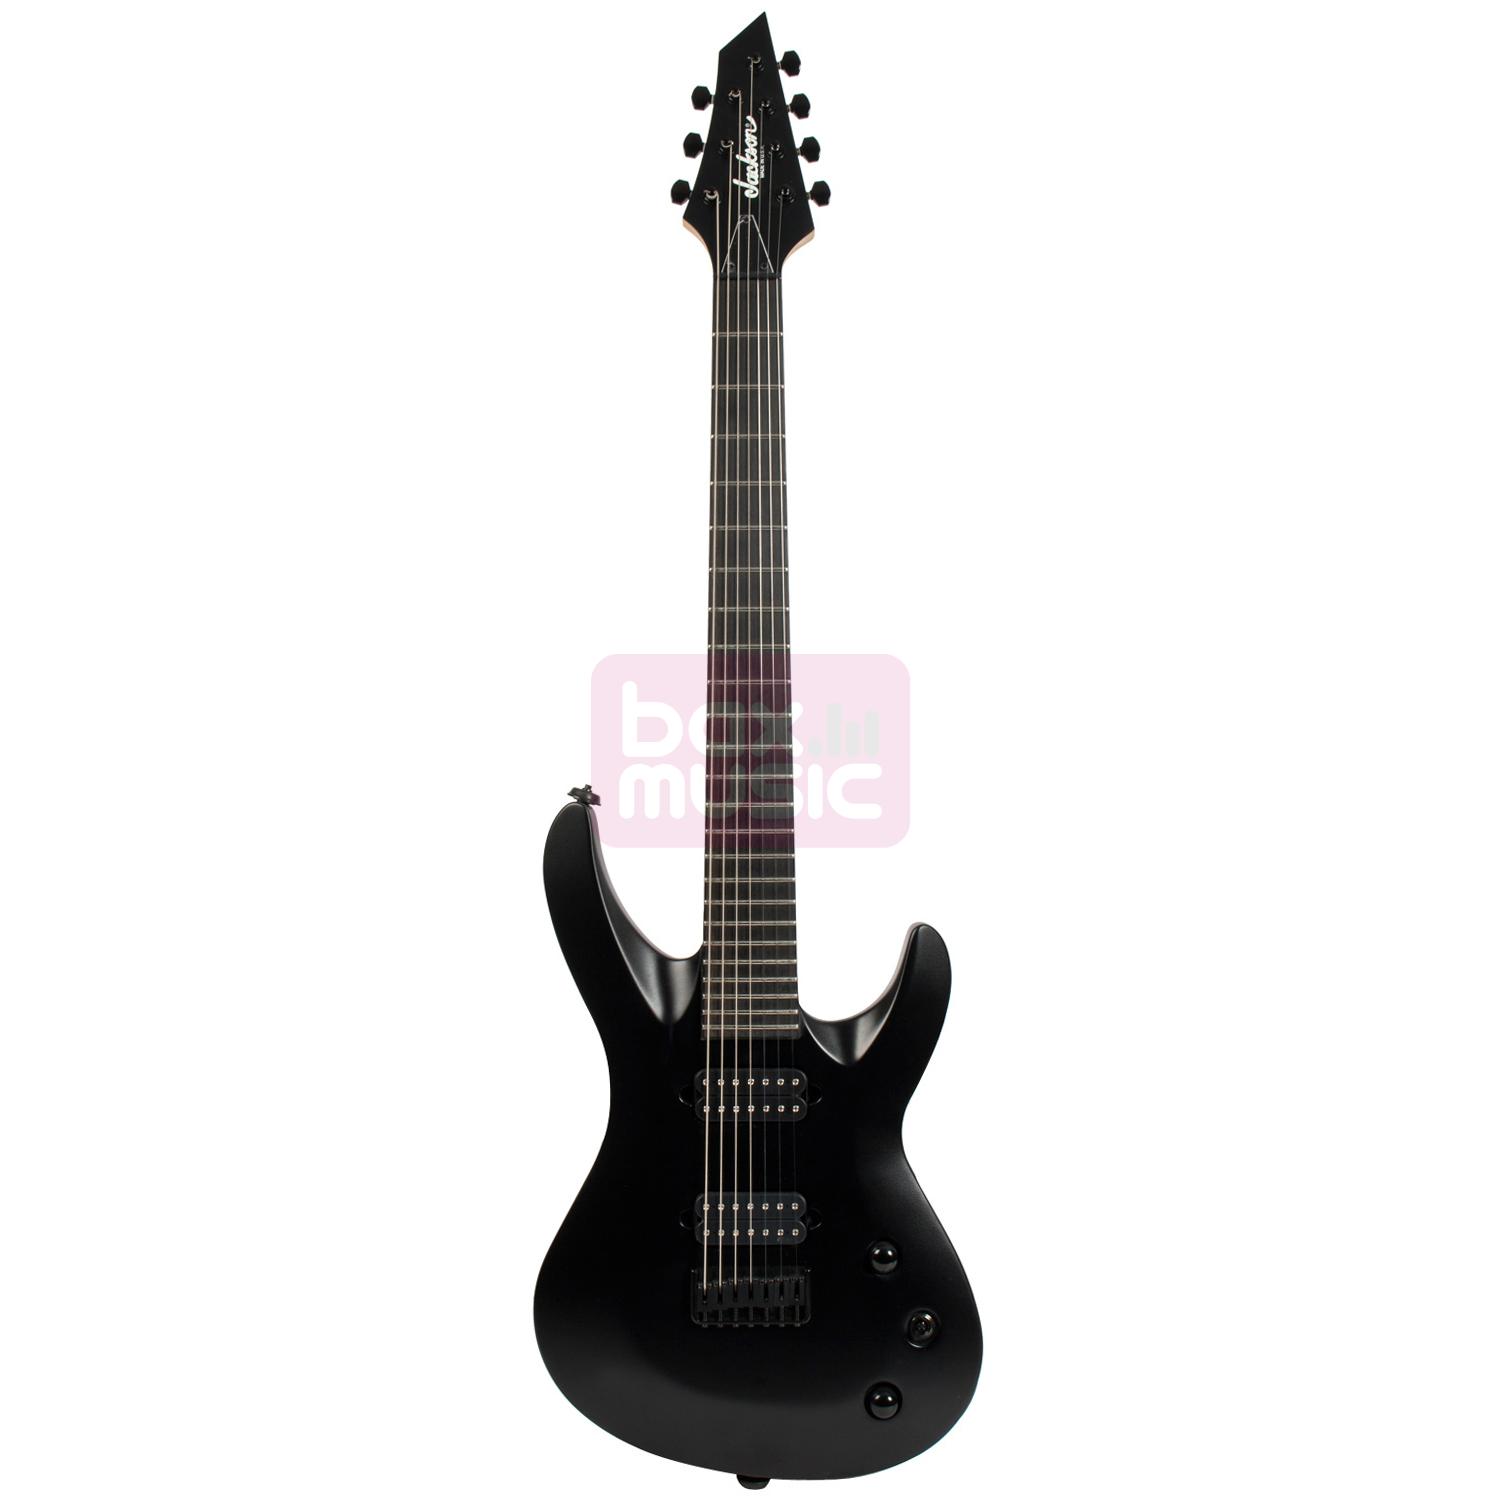 Jackson USA Select B7 Deluxe Satin Black gitaar